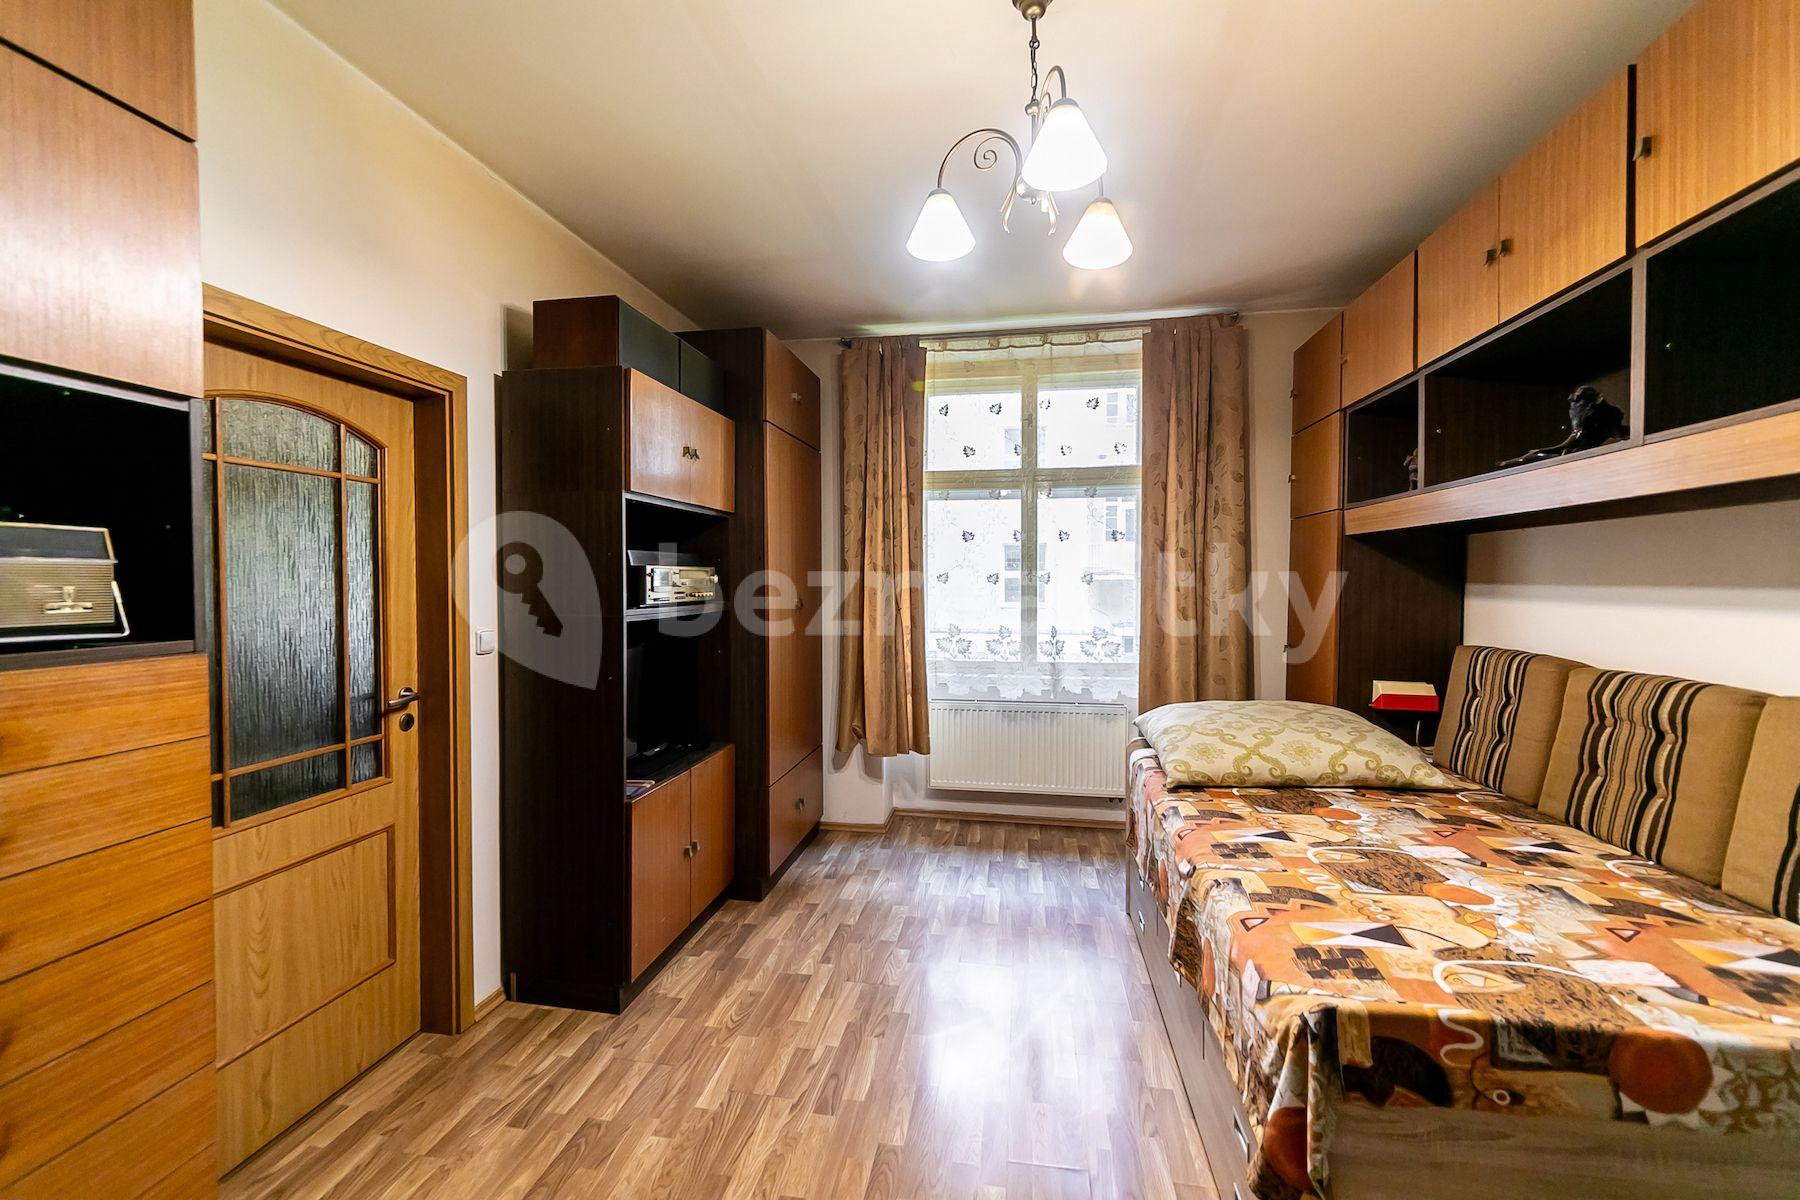 1 bedroom with open-plan kitchen flat for sale, 46 m², Eliášova, Prague, Prague